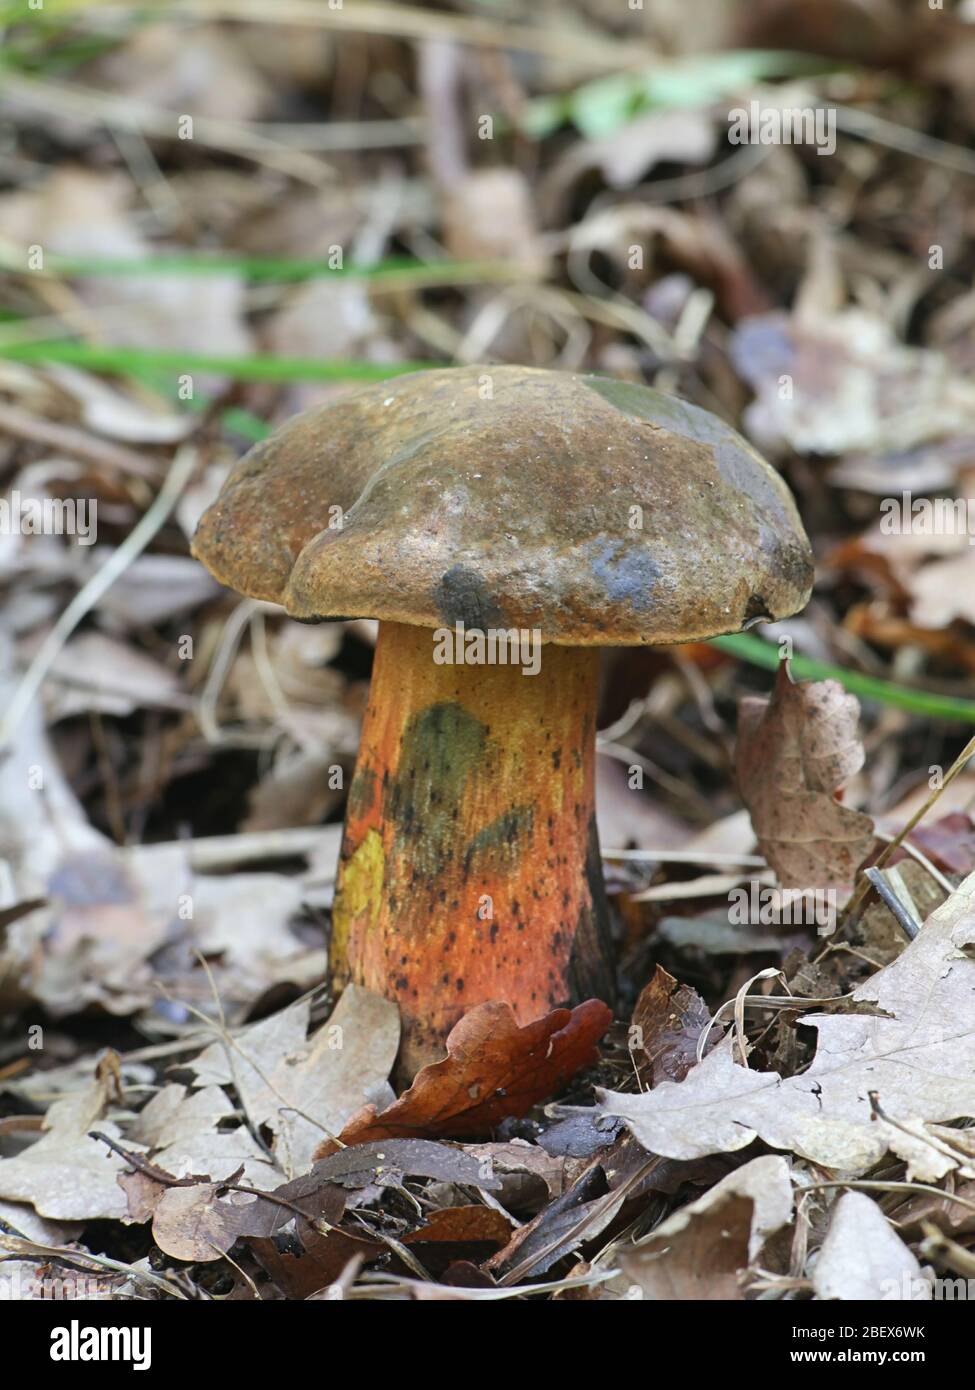 Neoboletus luridiformis, or Boletus luridiformis, known as the scarletina bolete, wild mushroom from Finland Stock Photo